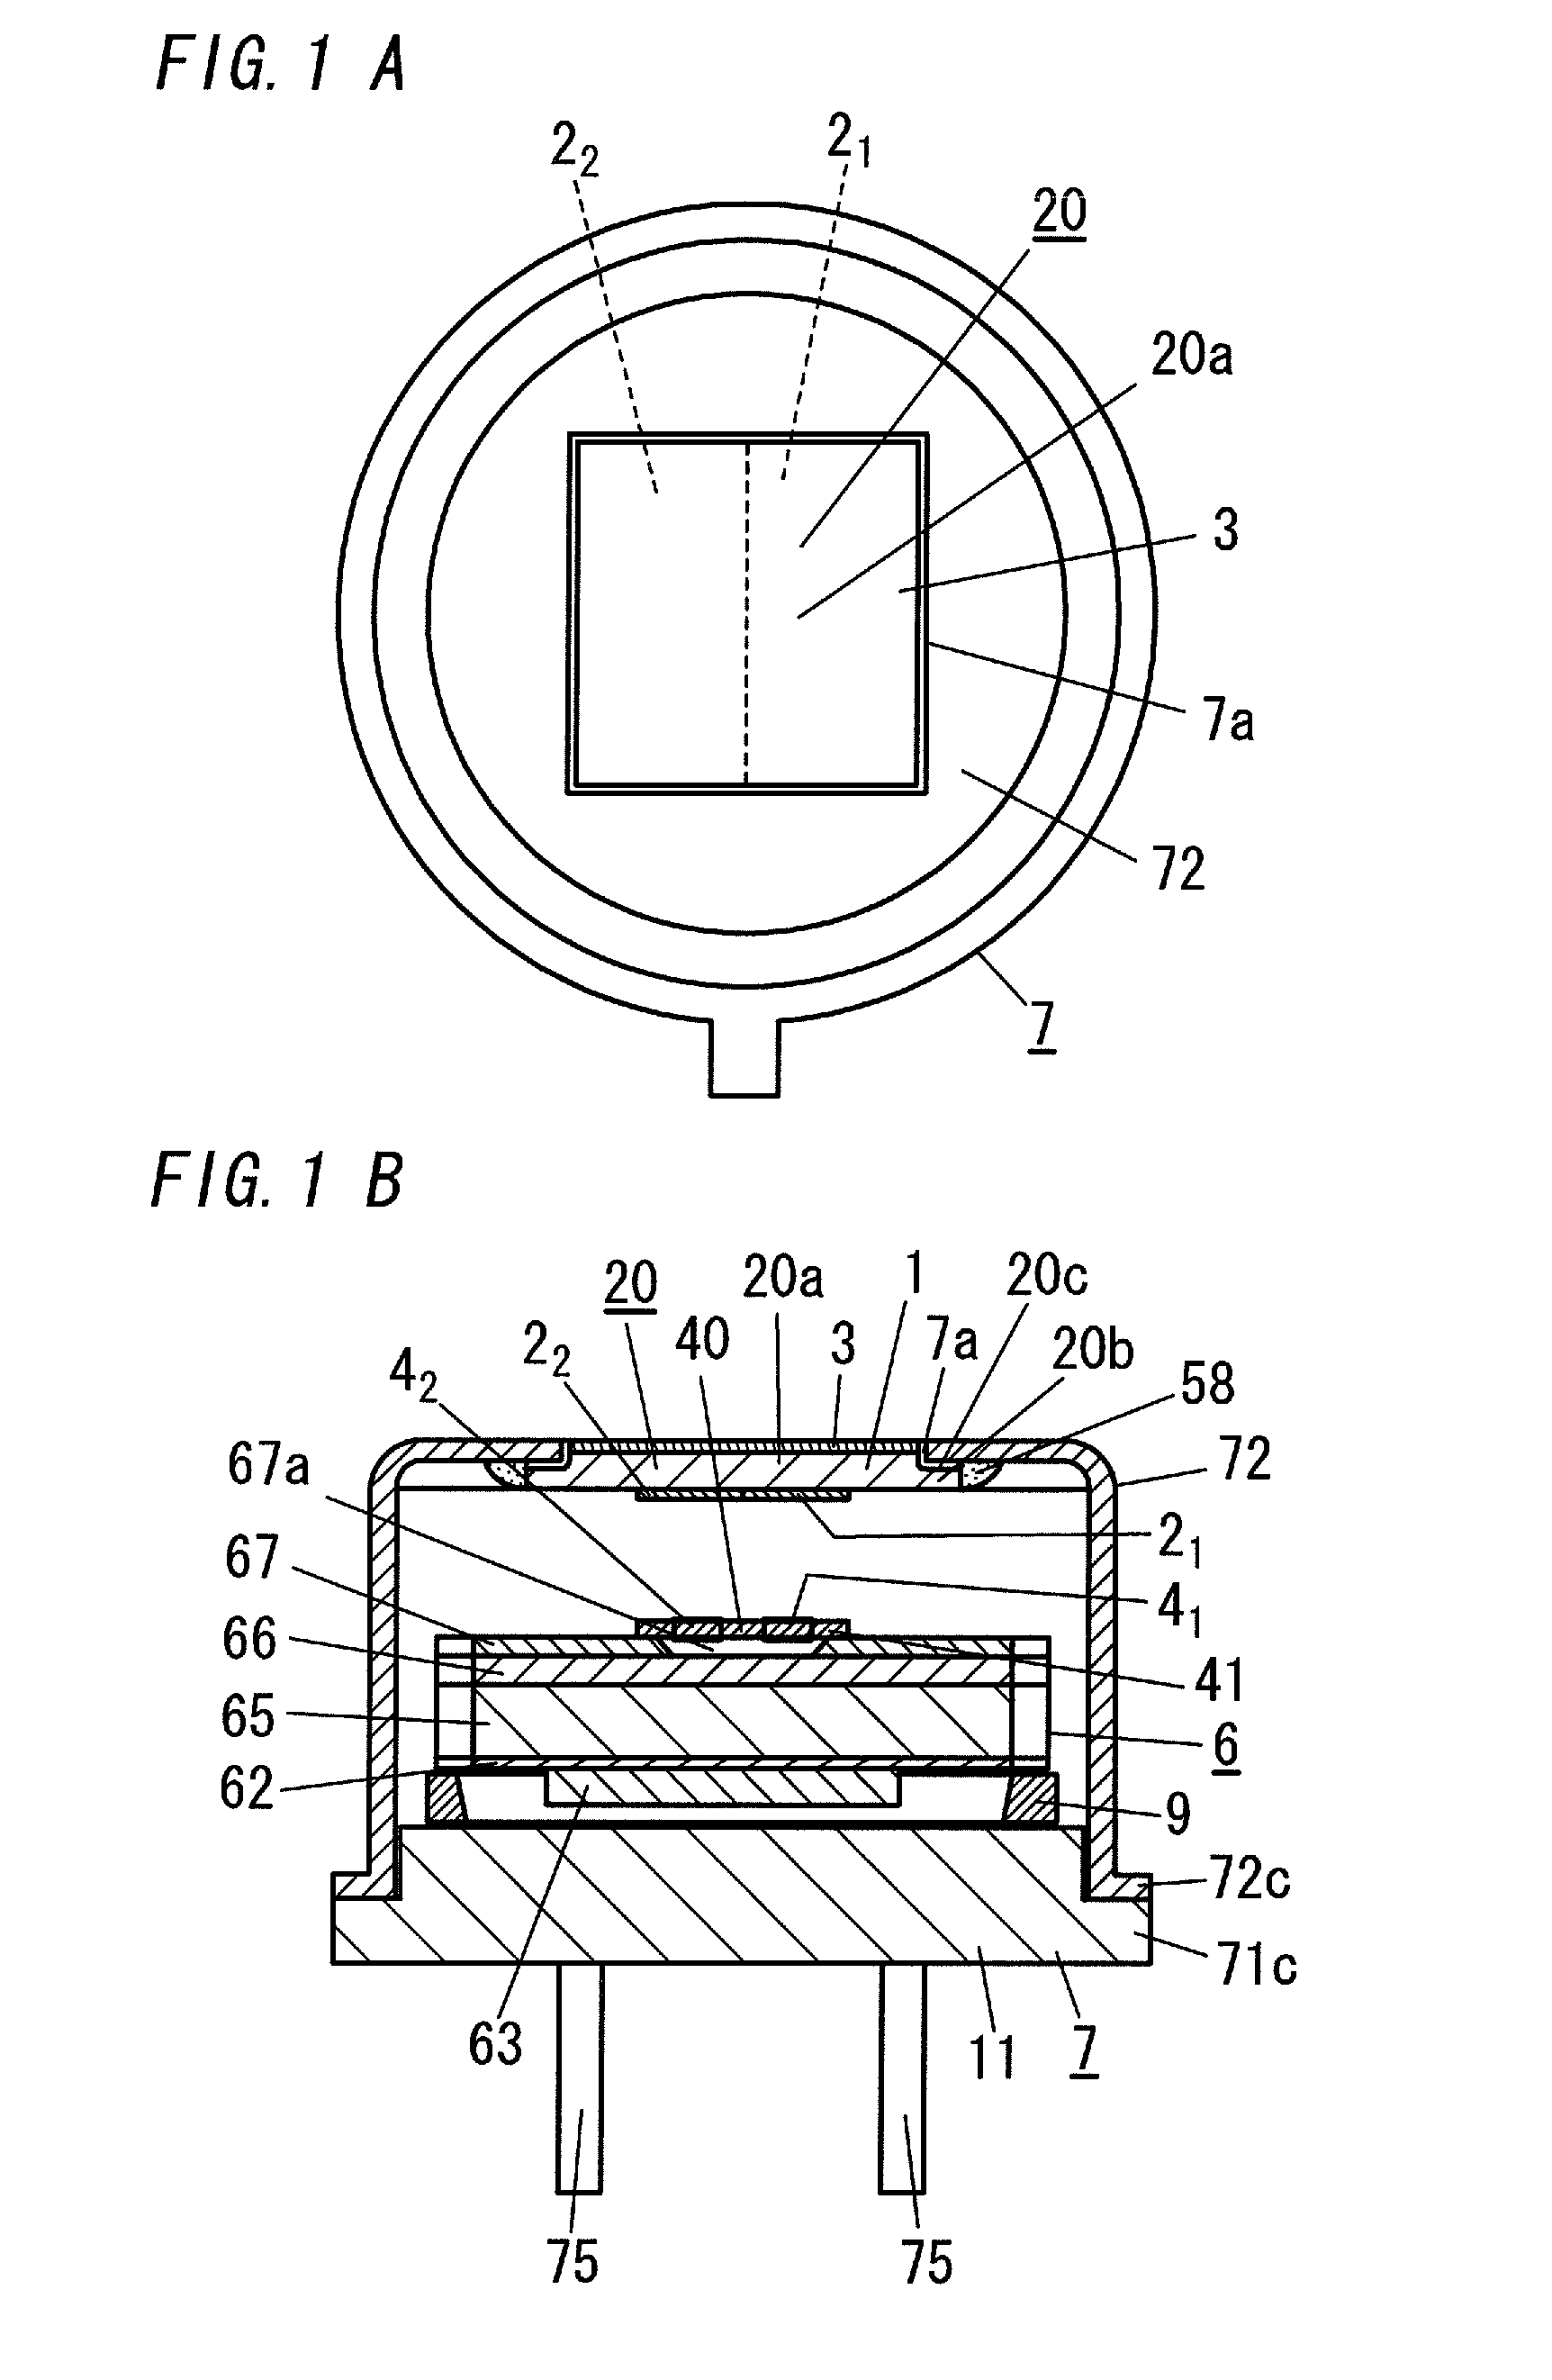 Infrared frame detector